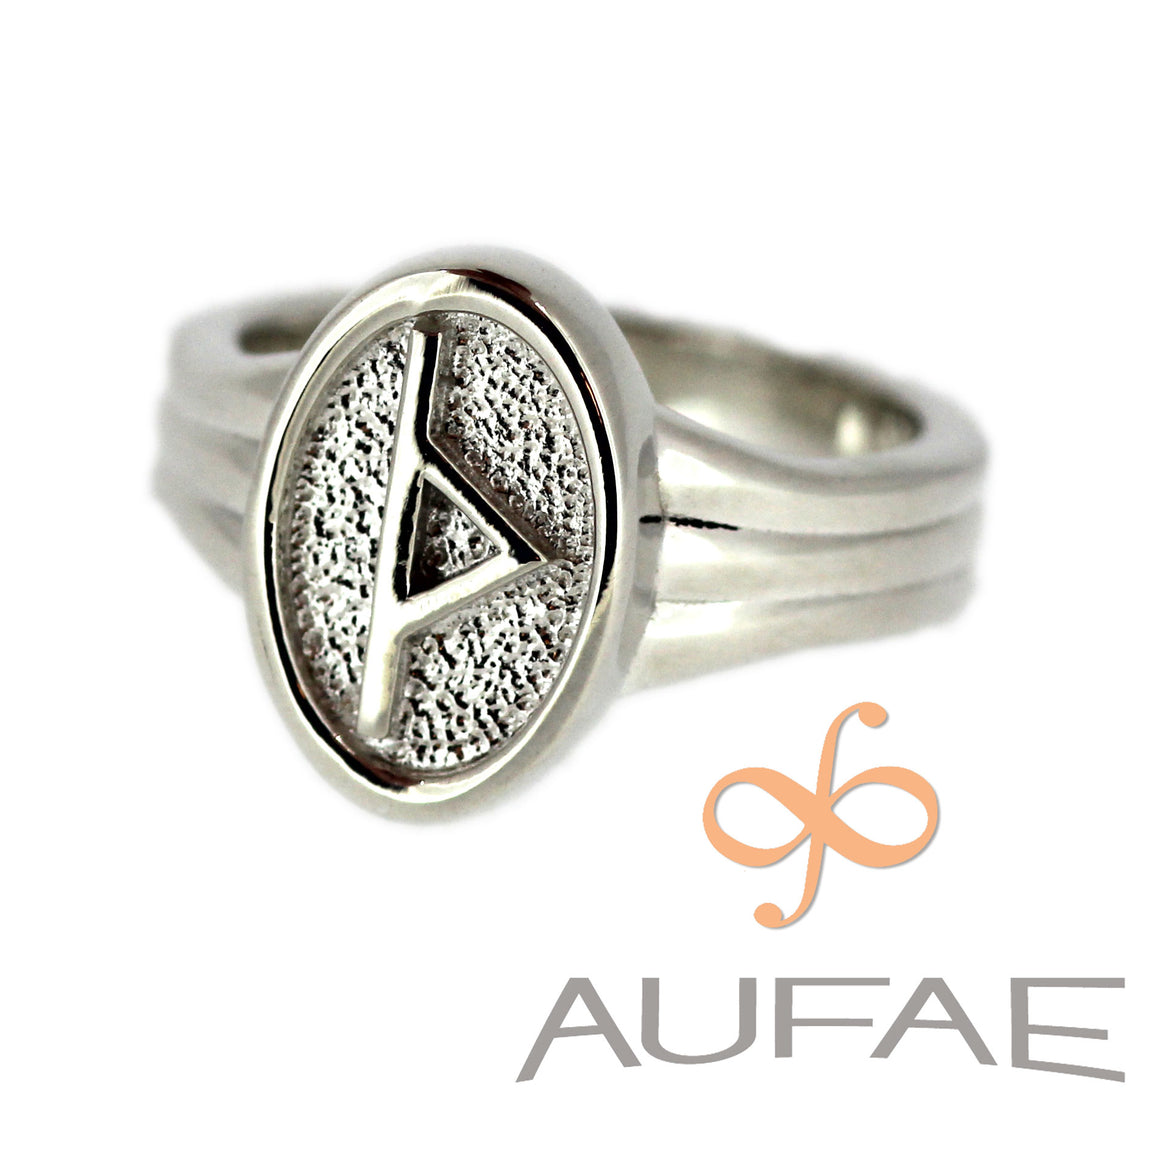 Aufae Thurisaz Rune Ring in Sterling Silver